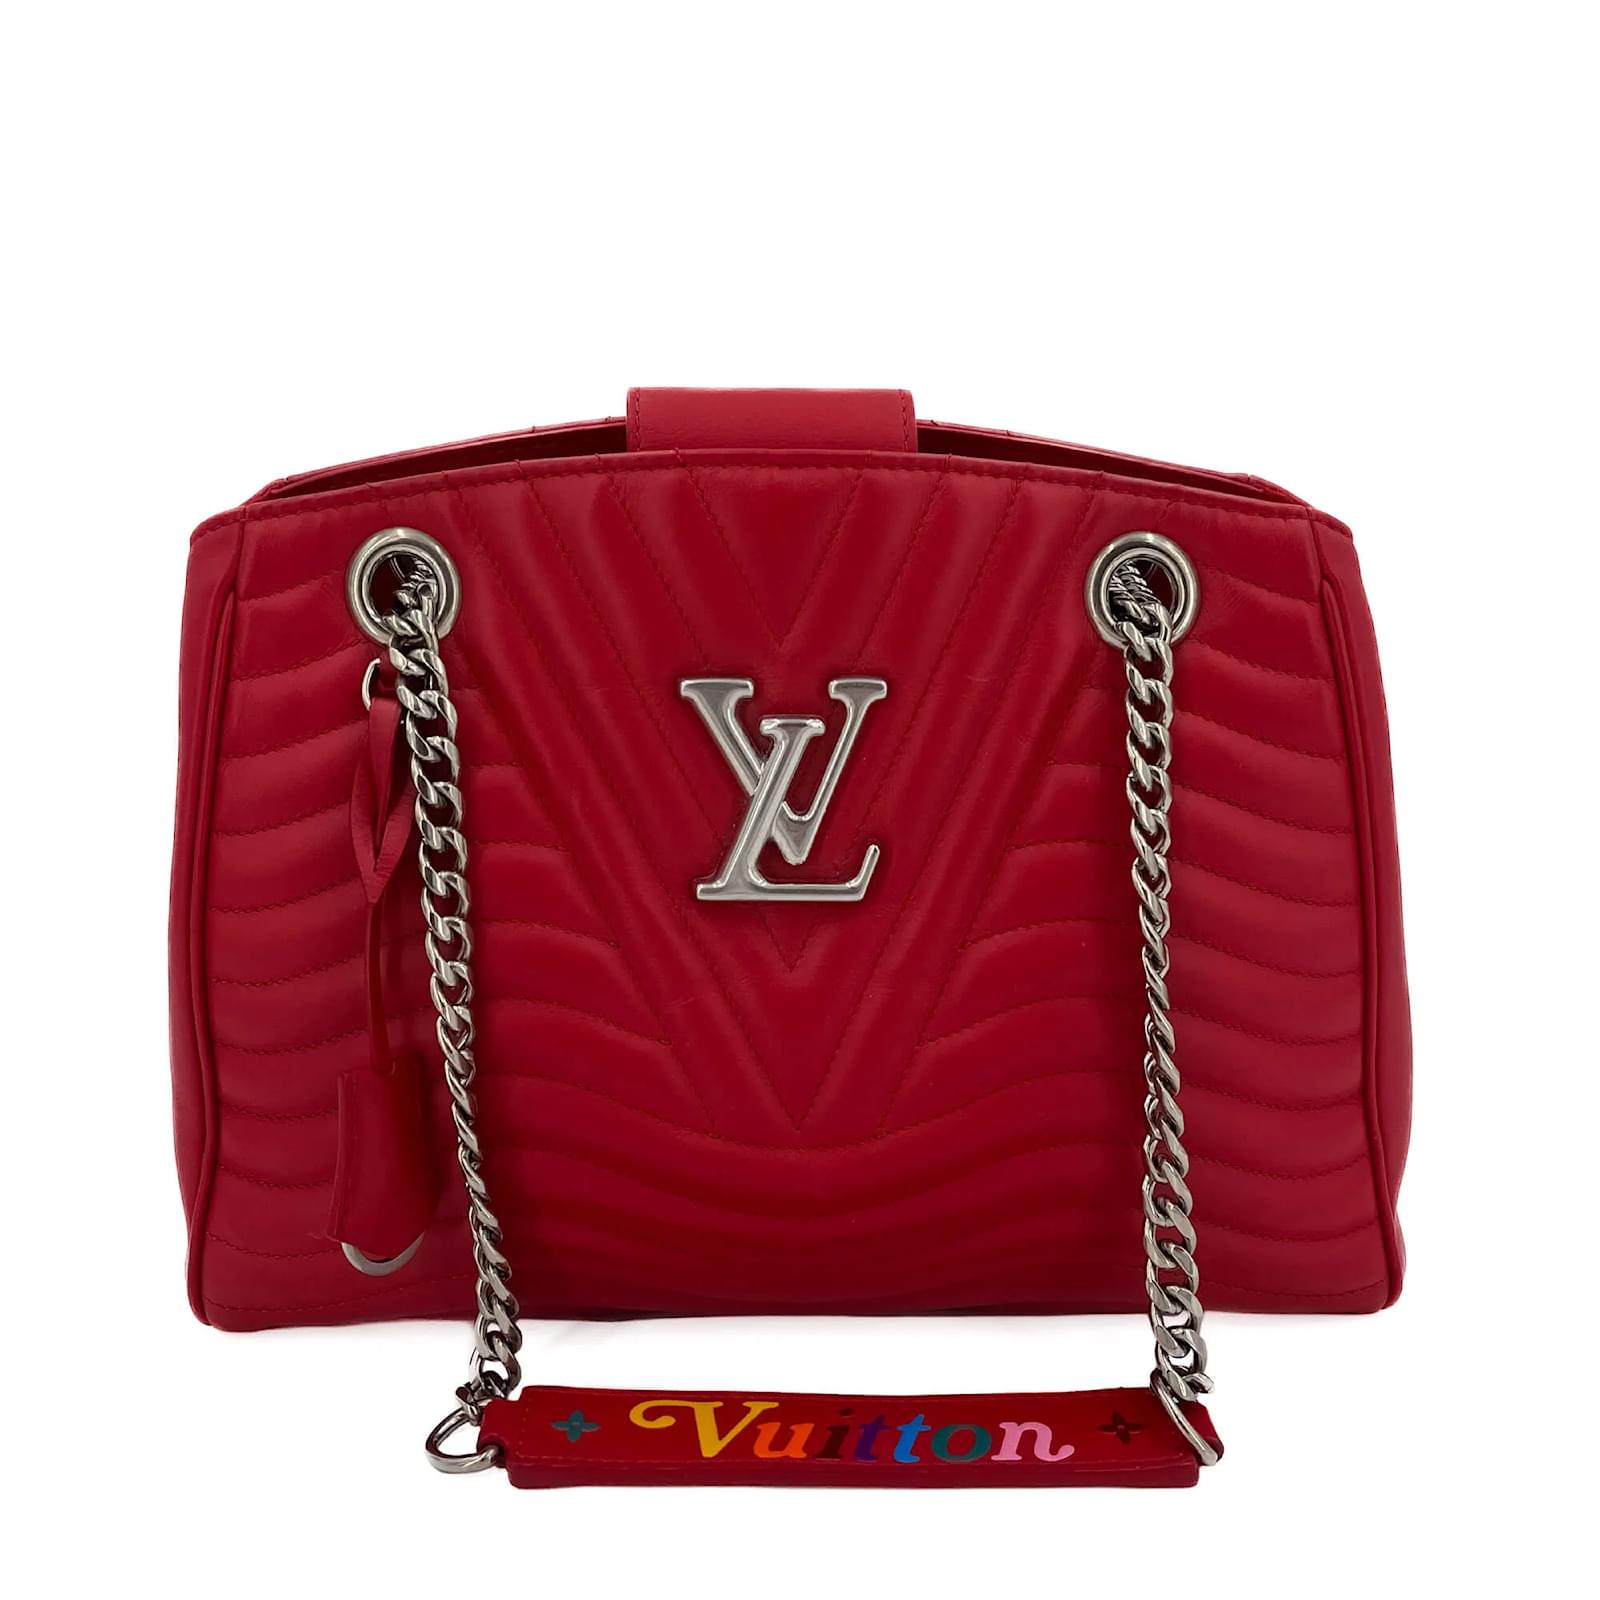 Louis Vuitton New Wave Chain Tote Bag